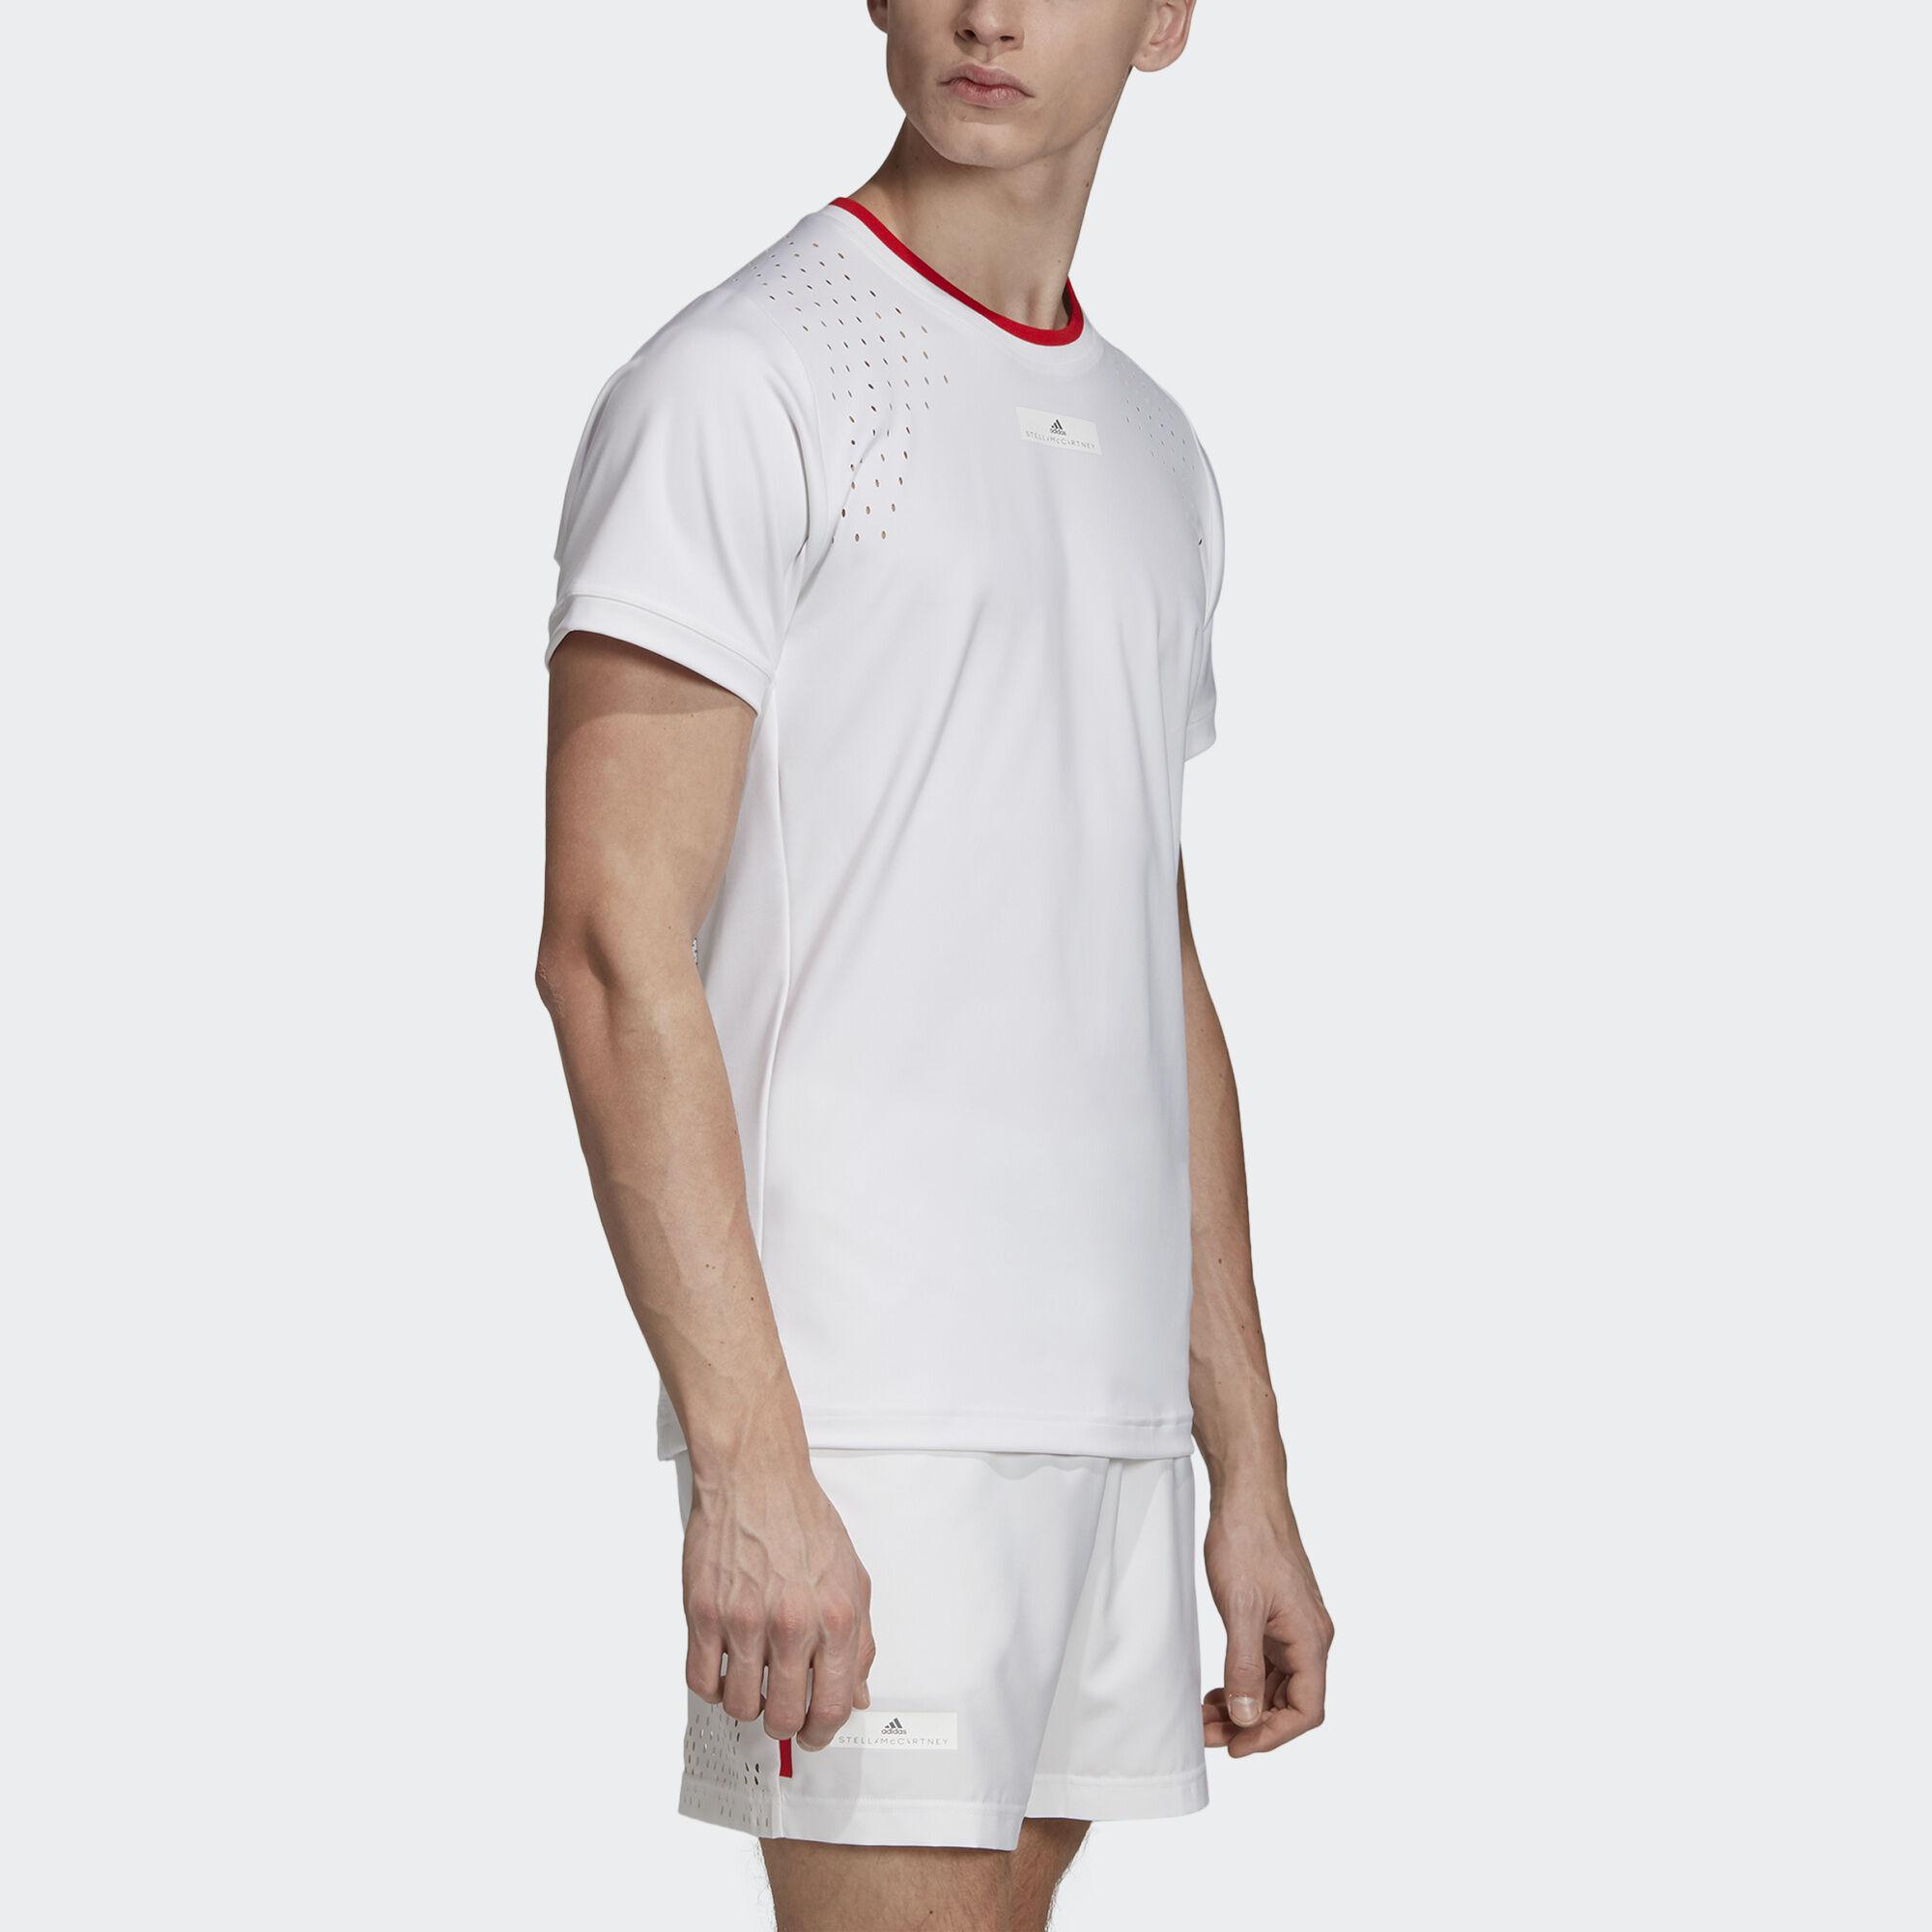 Adidas Mens Stella McCartney Court T-Shirt - White - Tennisnuts.com